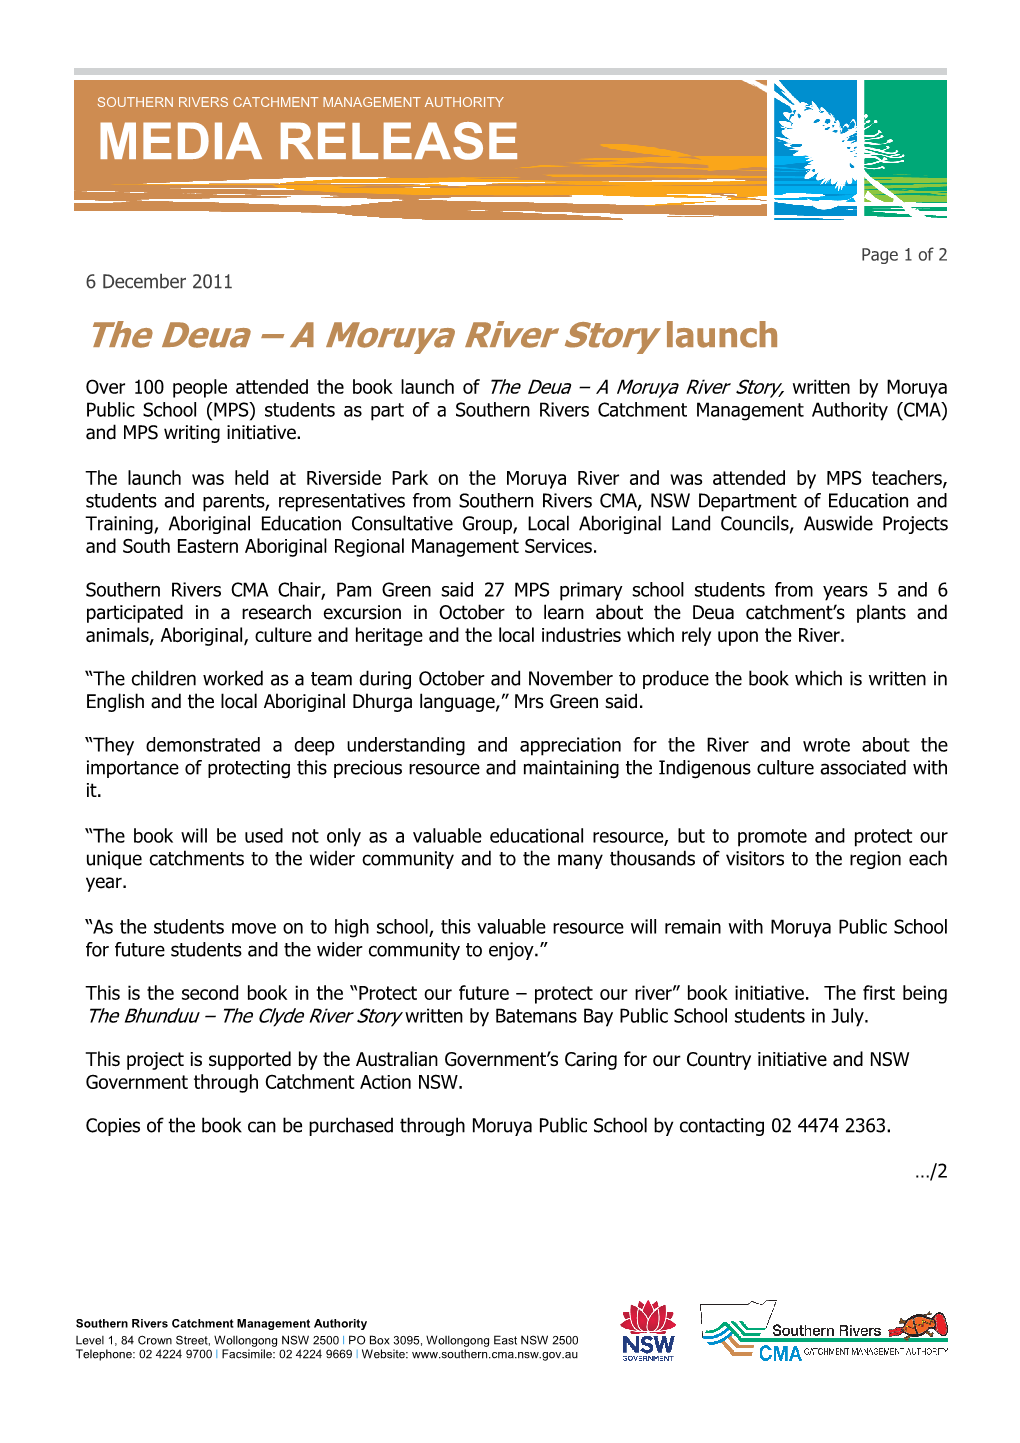 A Moruya River Story Launch